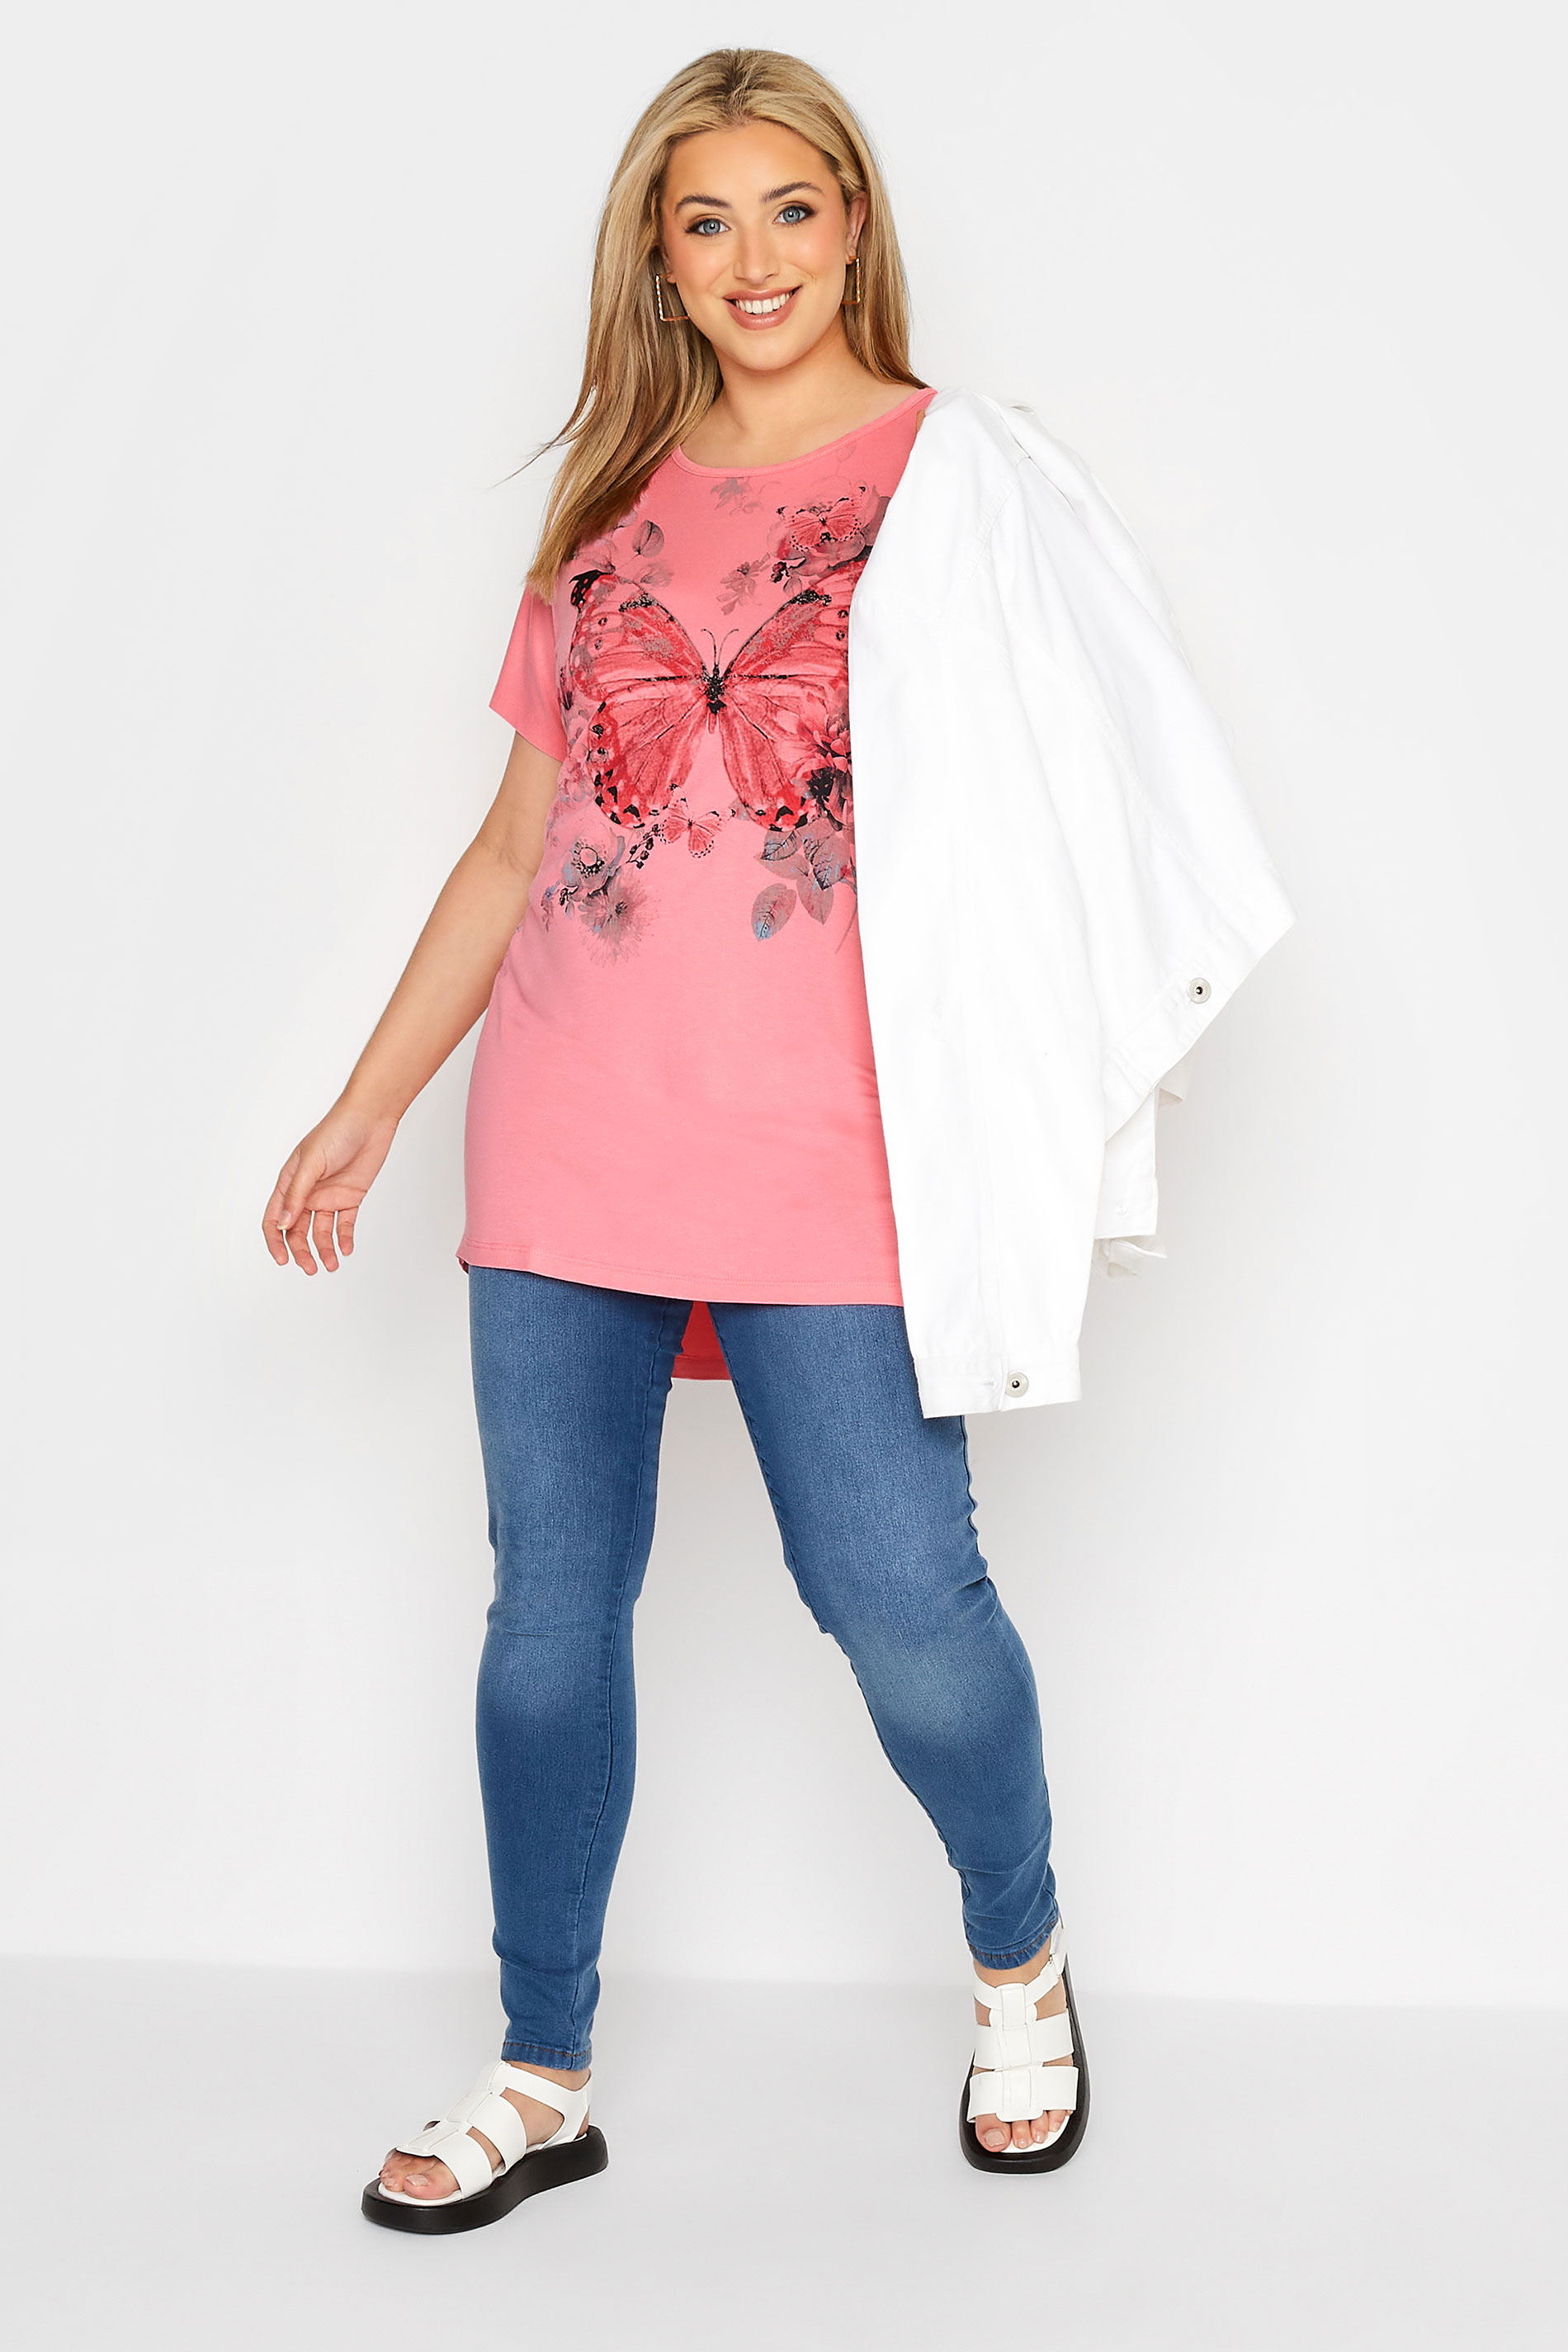 Grande taille  Tops Grande taille  T-Shirts | T-Shirt Rose Design Papillon - DI16845